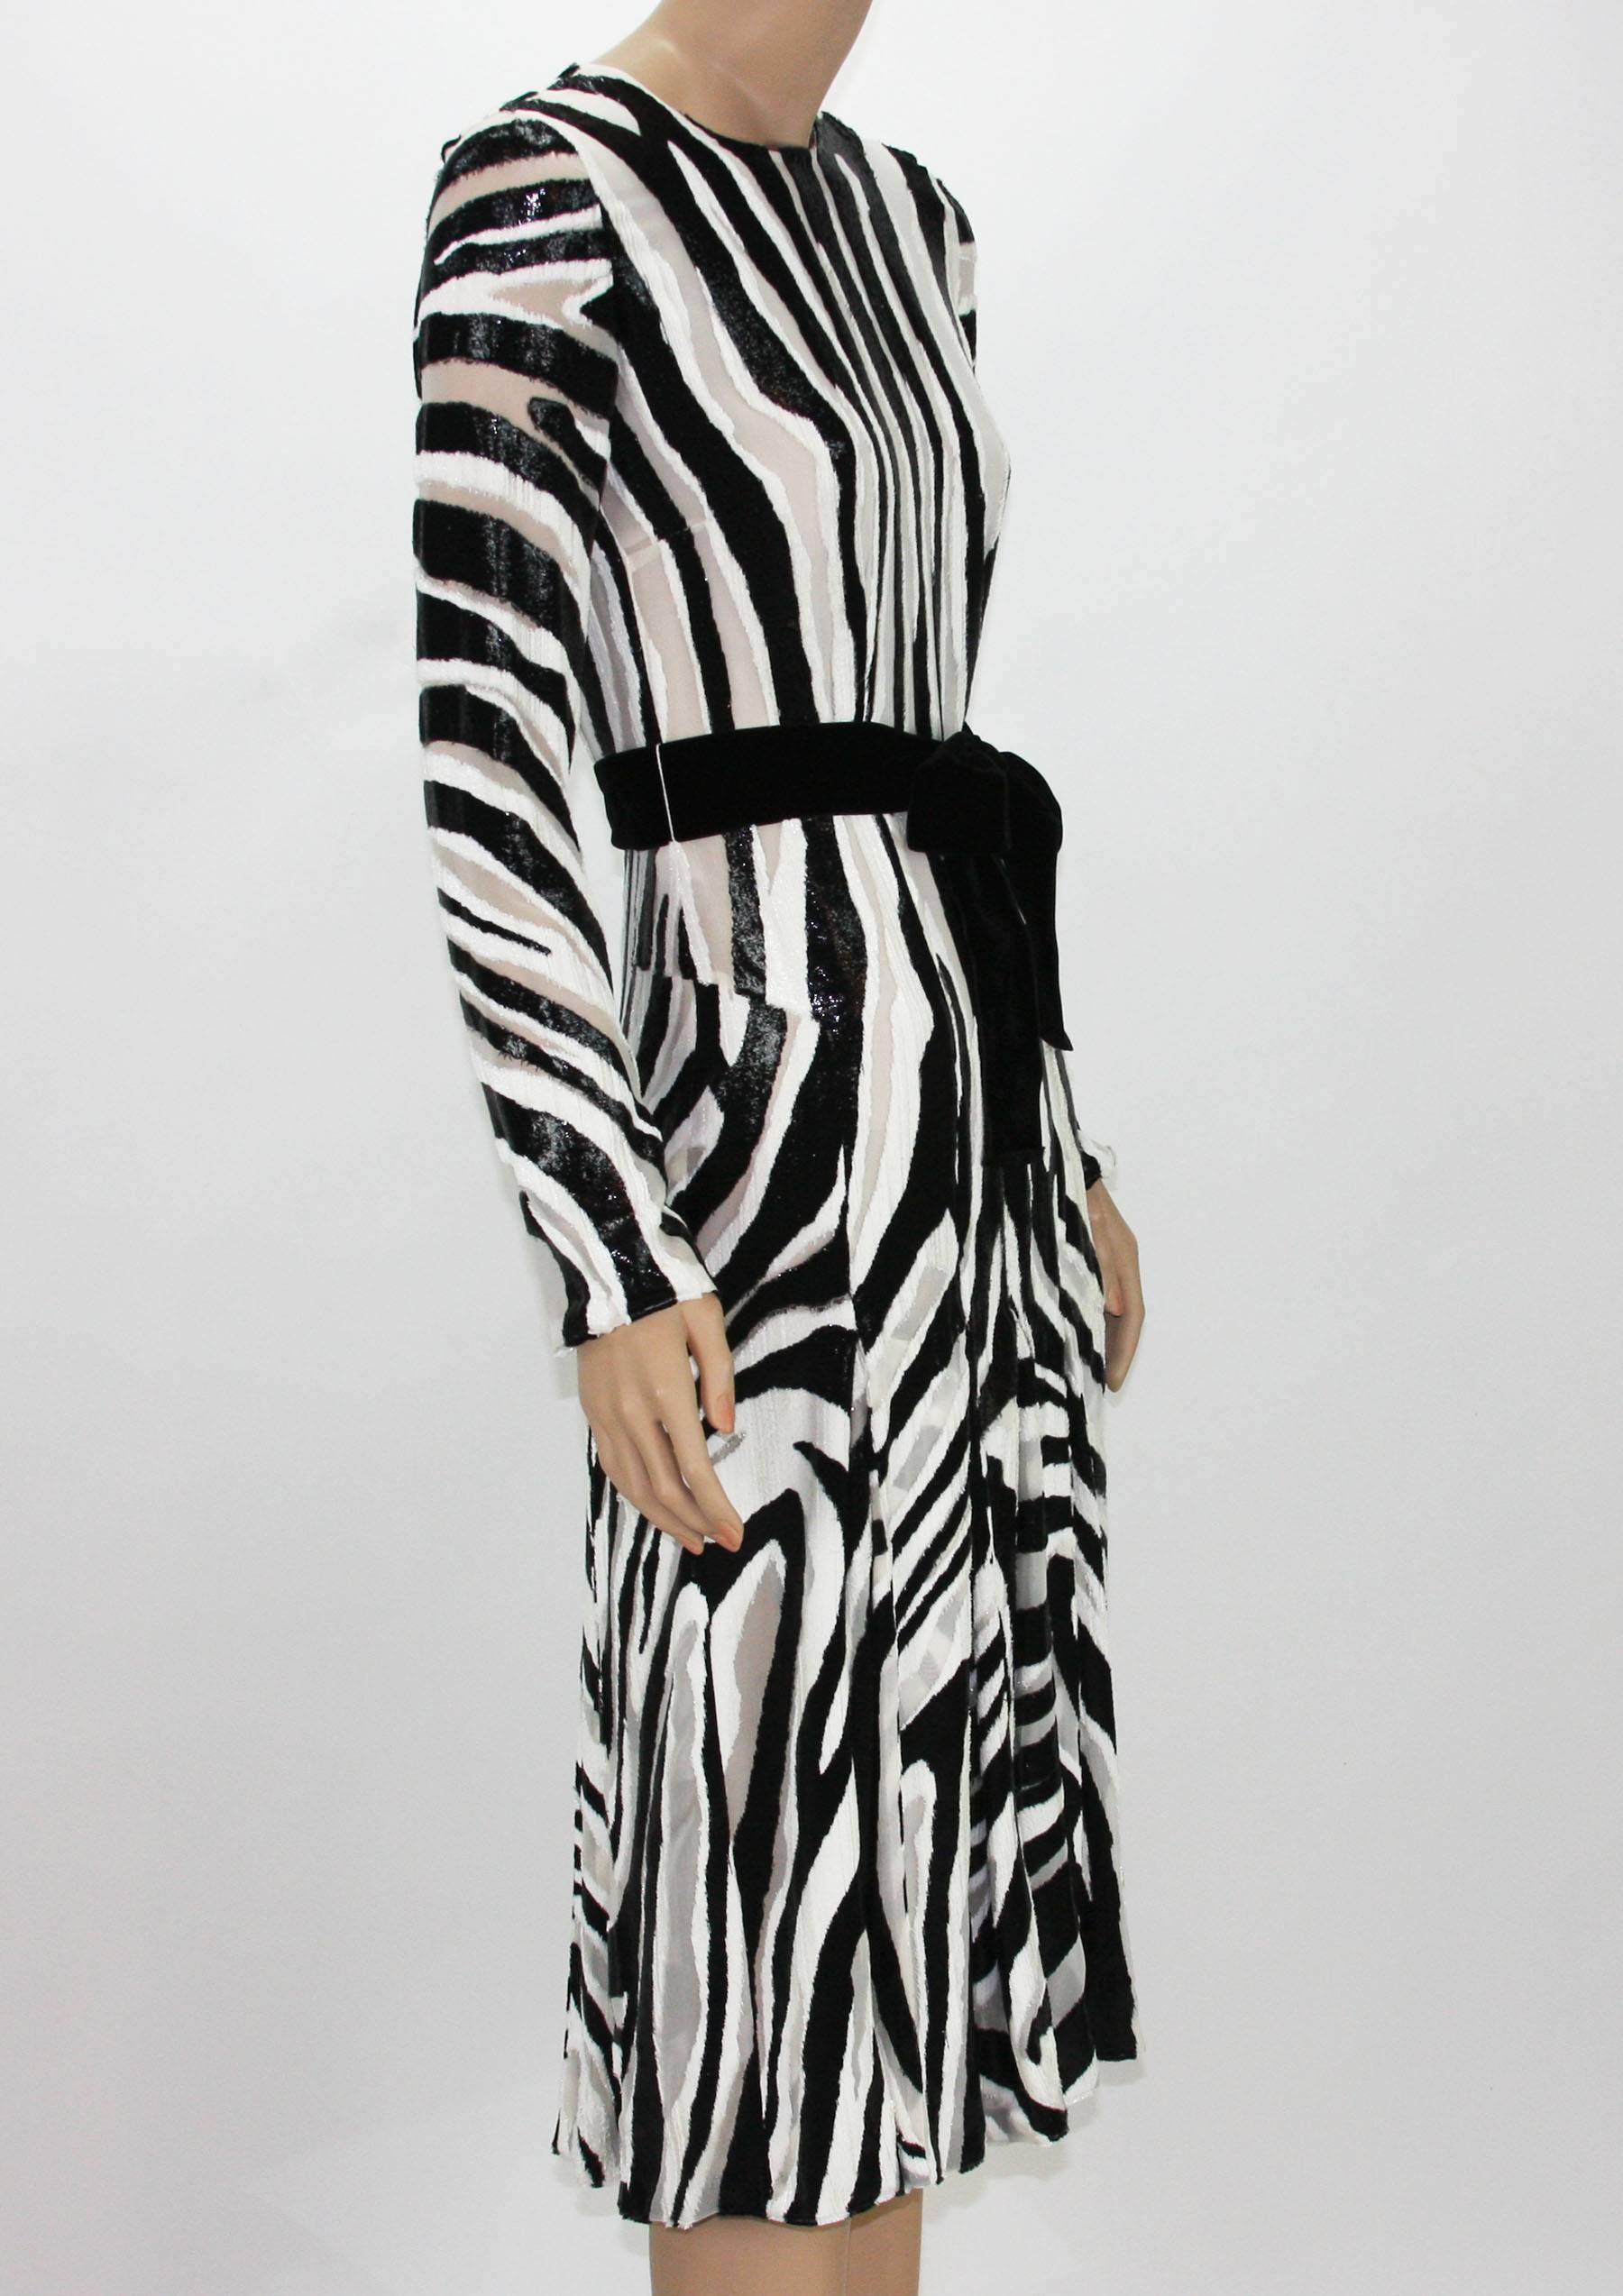 tom ford zebra dress